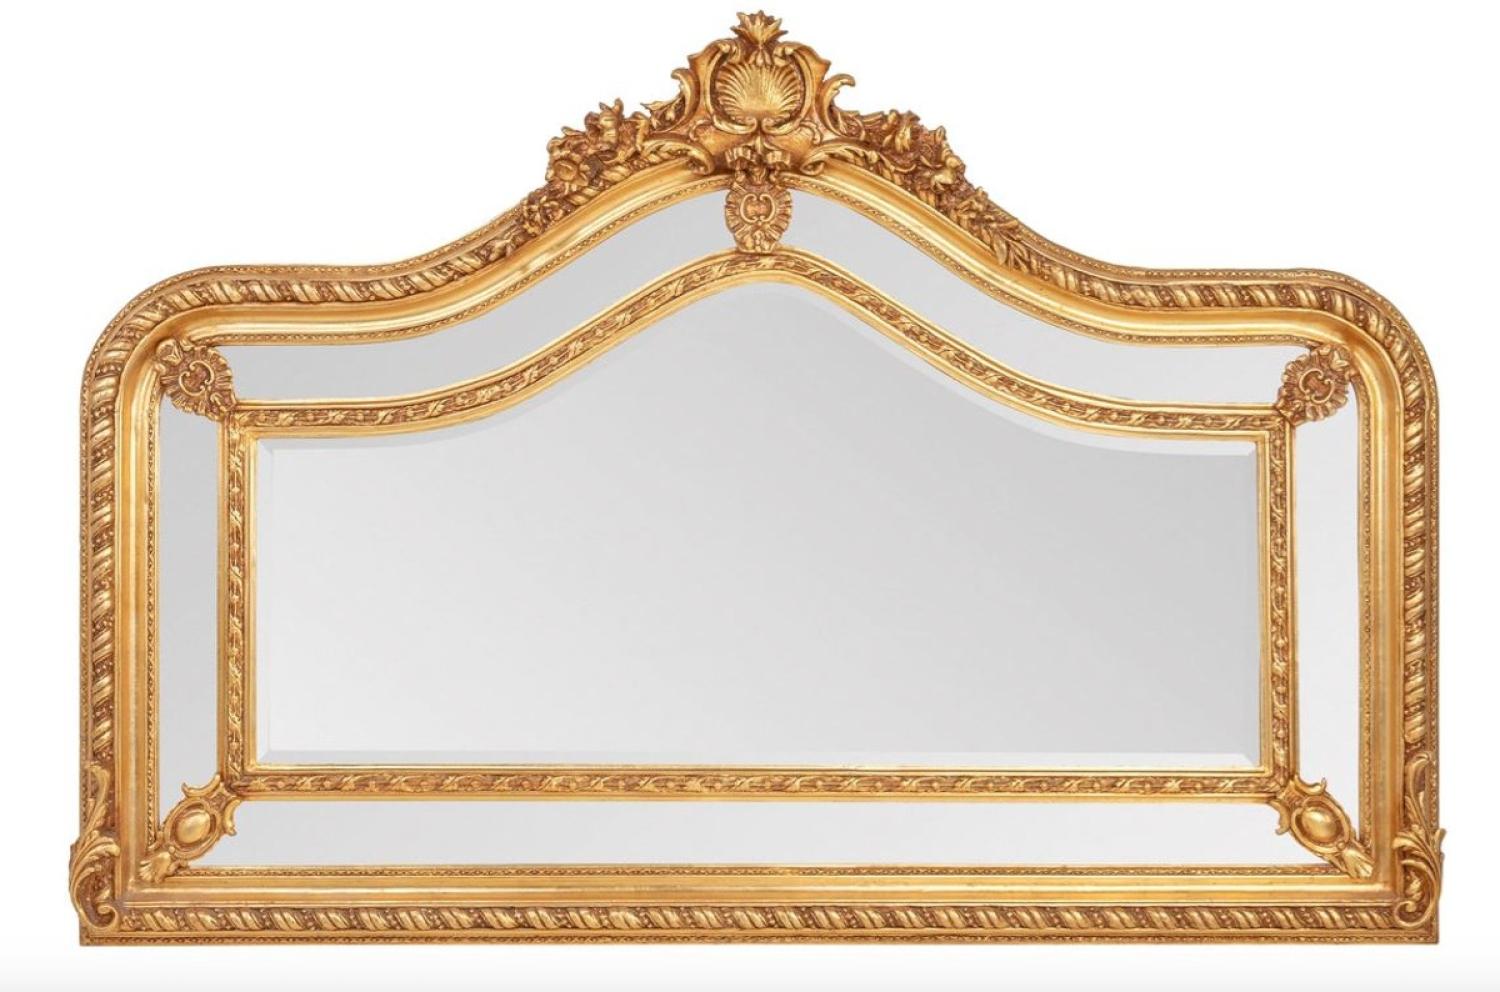 Prunkvoller Casa Padrino Barock Spiegel Gold 125 x 190 cm - Antik Stil - Schwere Ausführung Bild 1